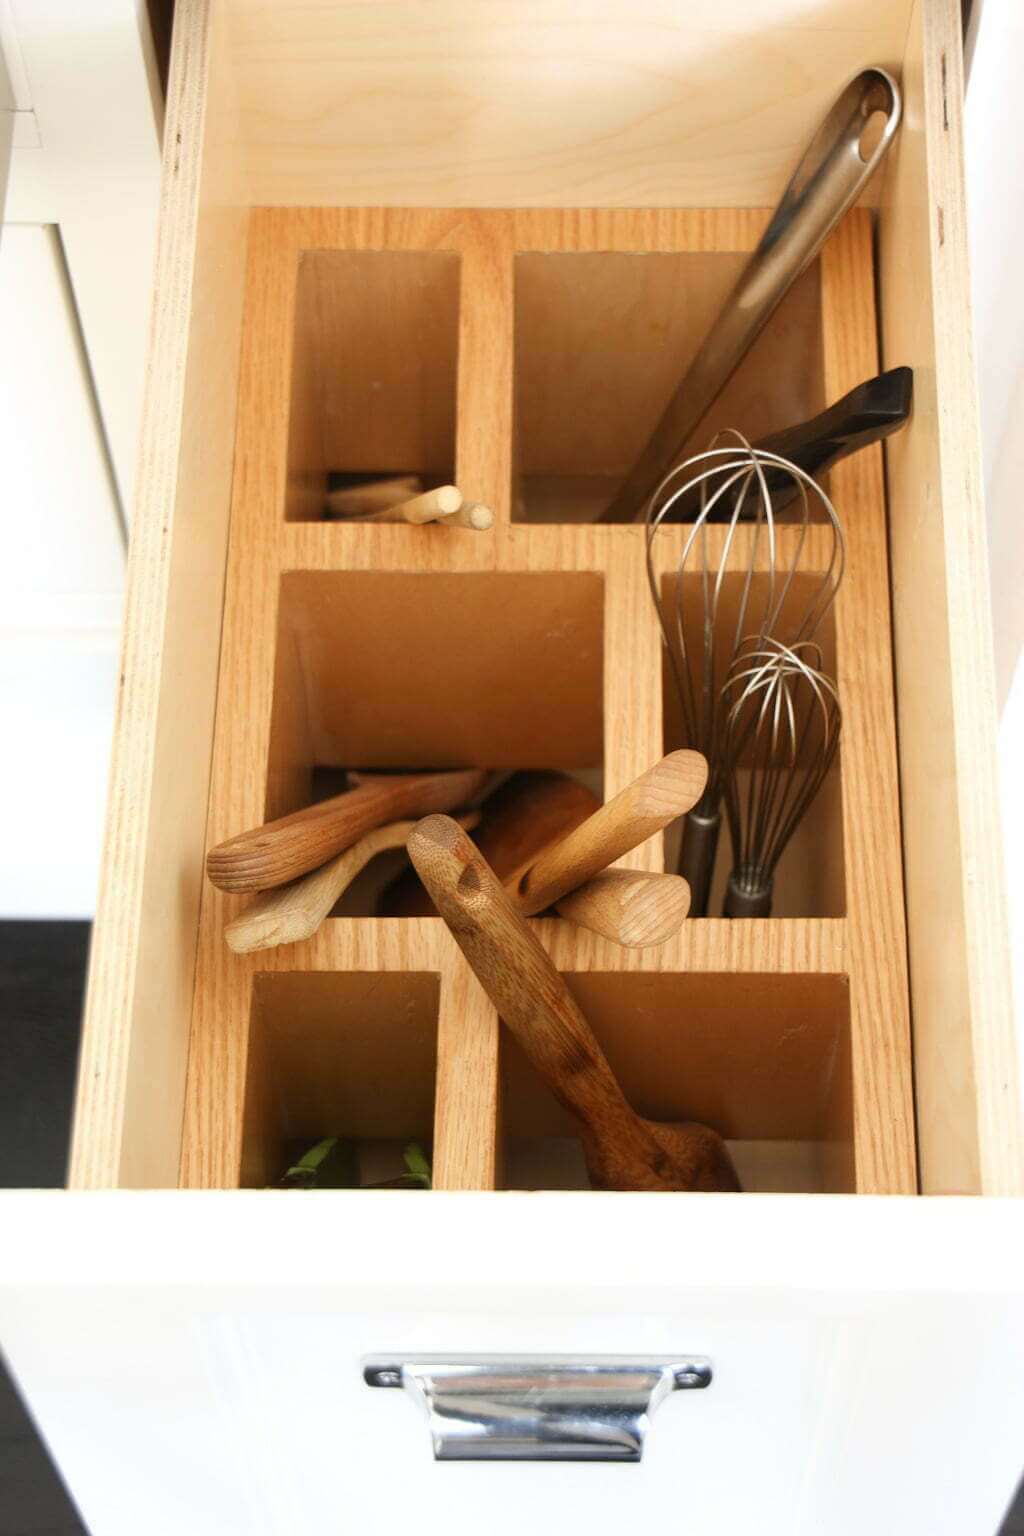 vertical kitchen storage for cooking utensils in drawer